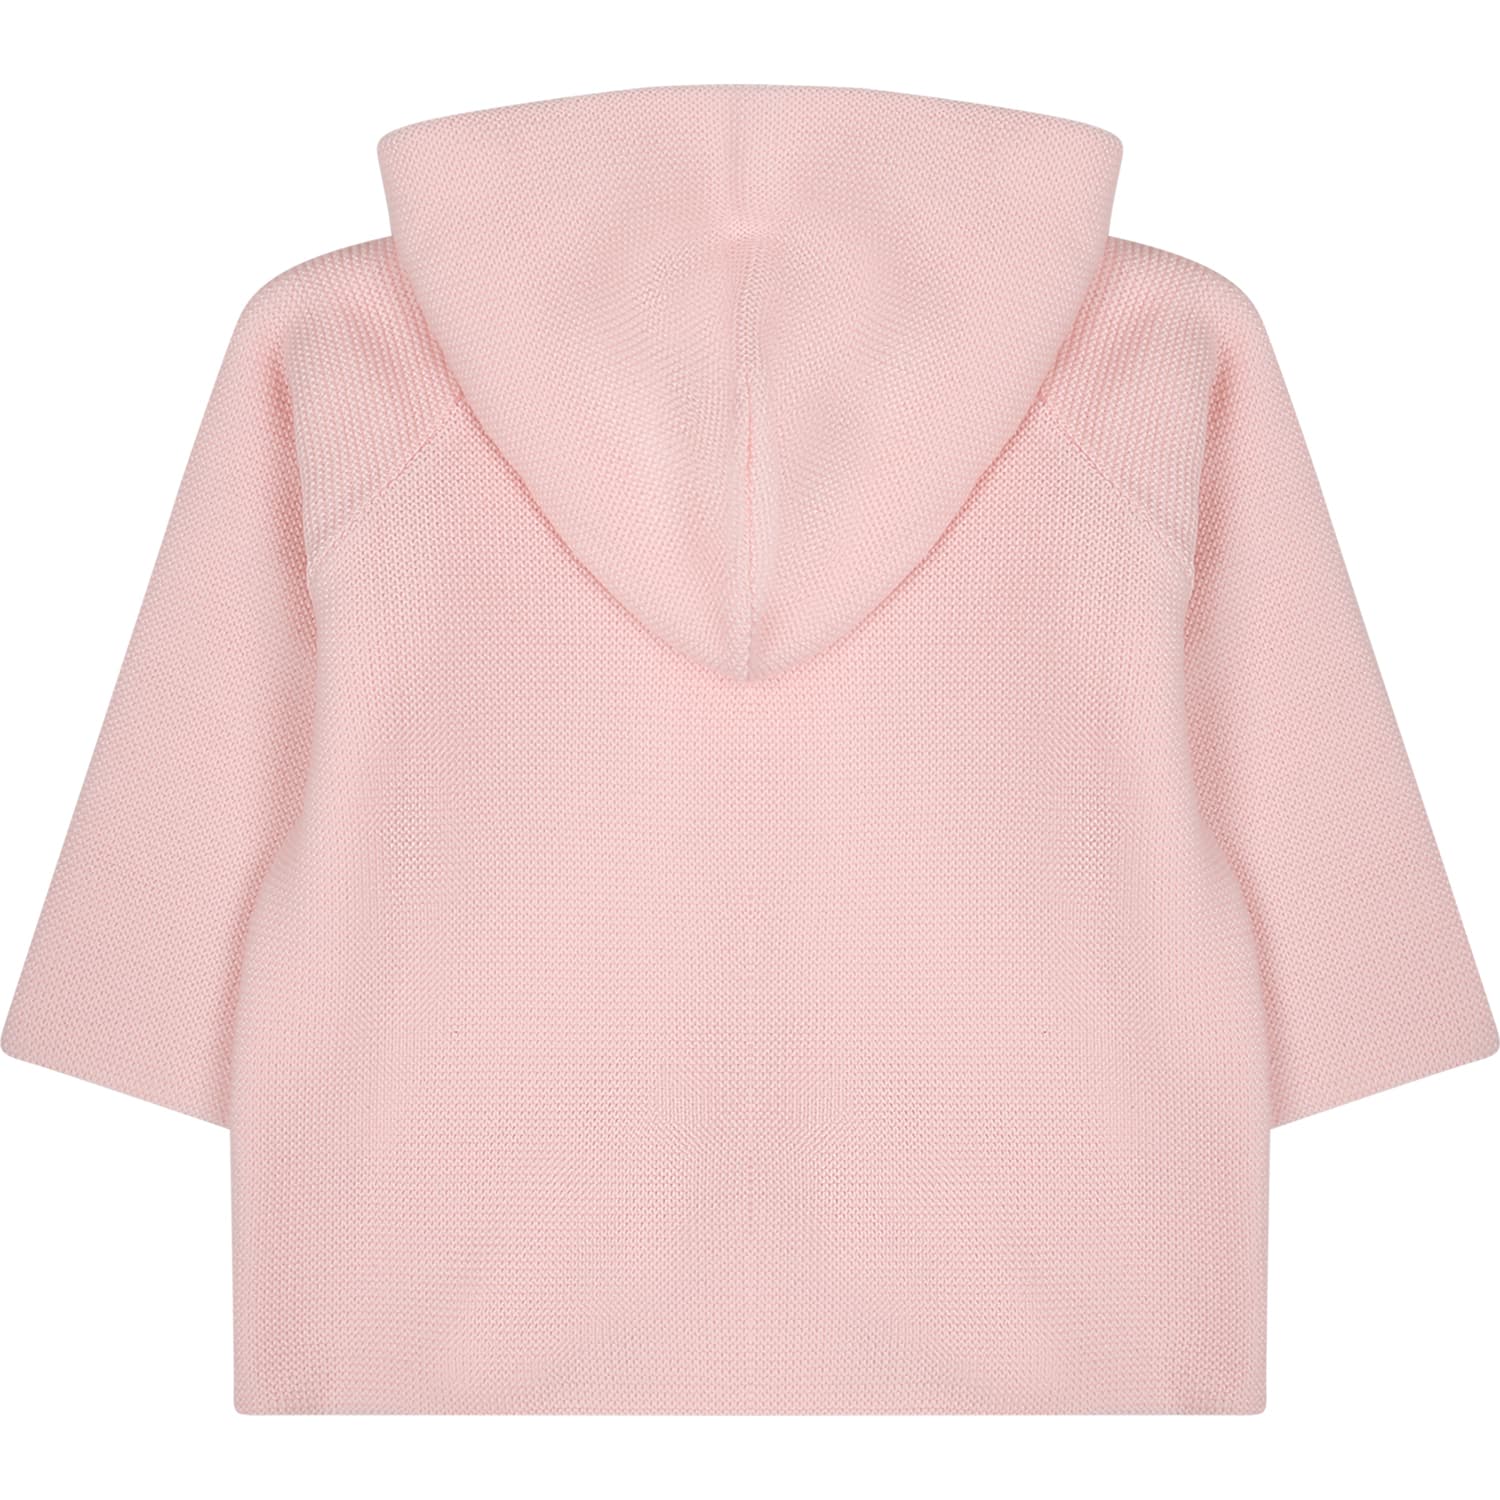 Shop Little Bear Pink Coat For Baby Girl